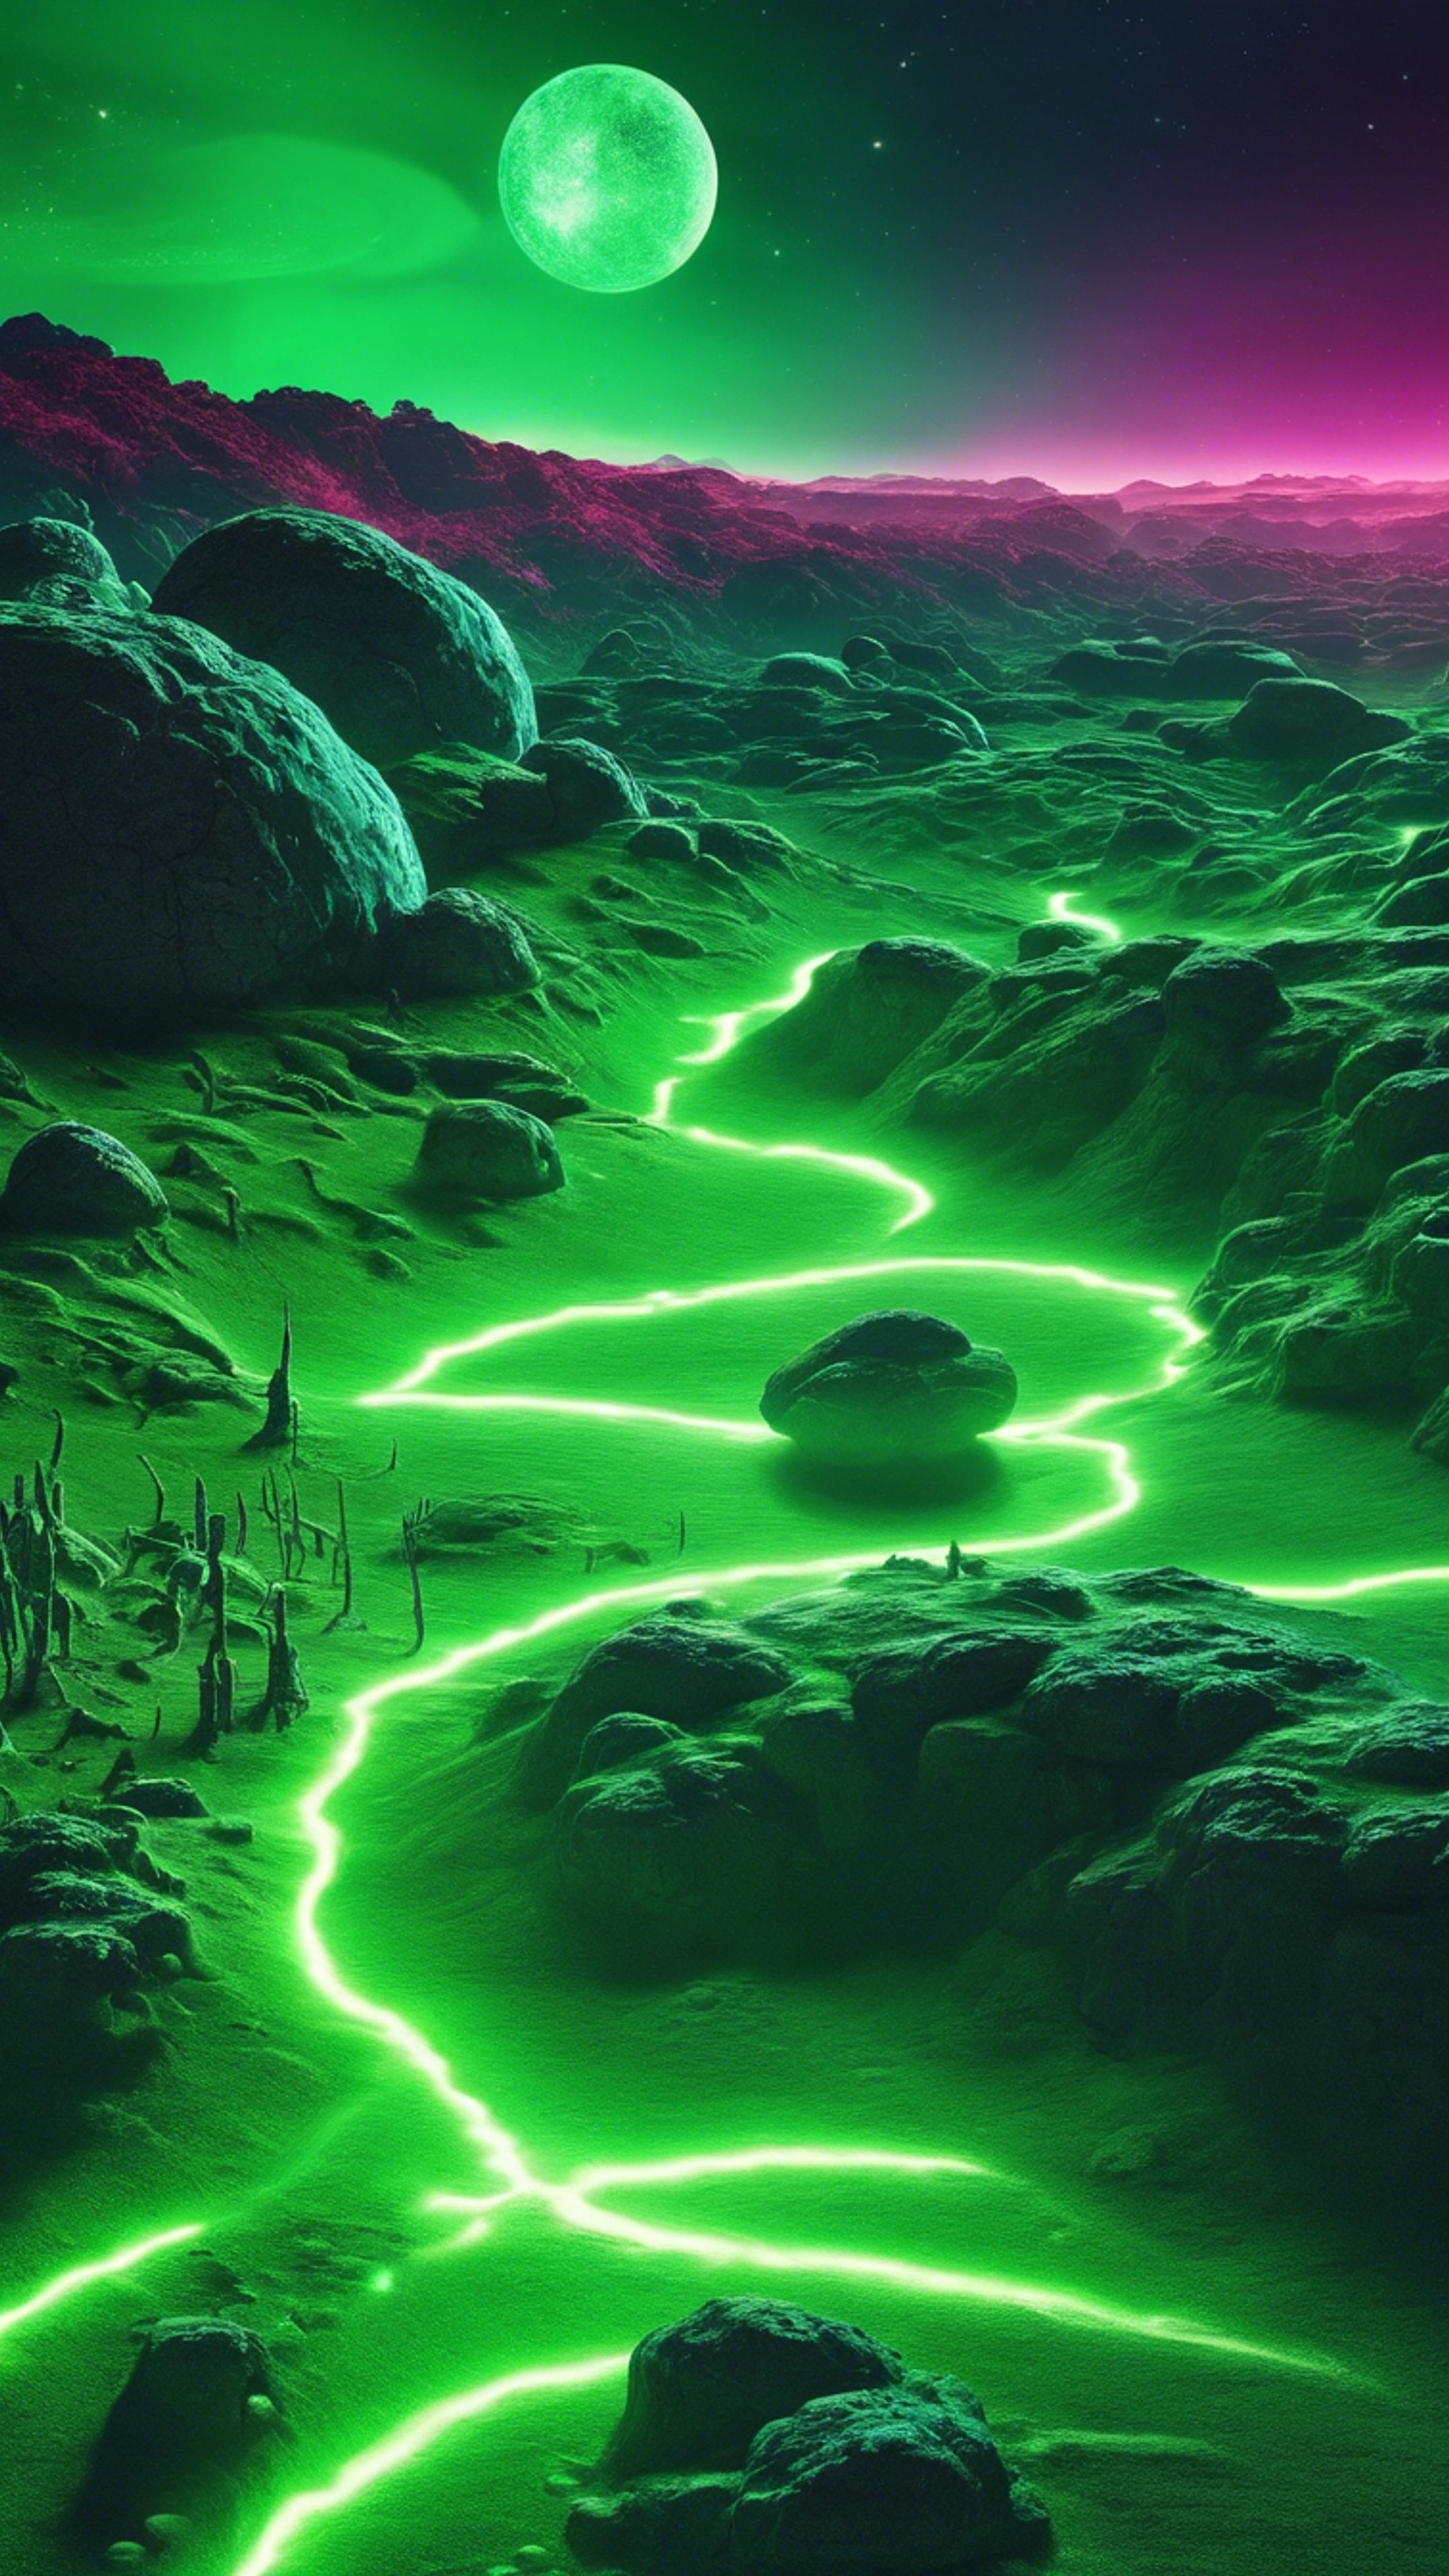 An alien planet landscape illuminated with cool neon green light. Ταπετσαρία[c1d7fd56055c47ca89e3]